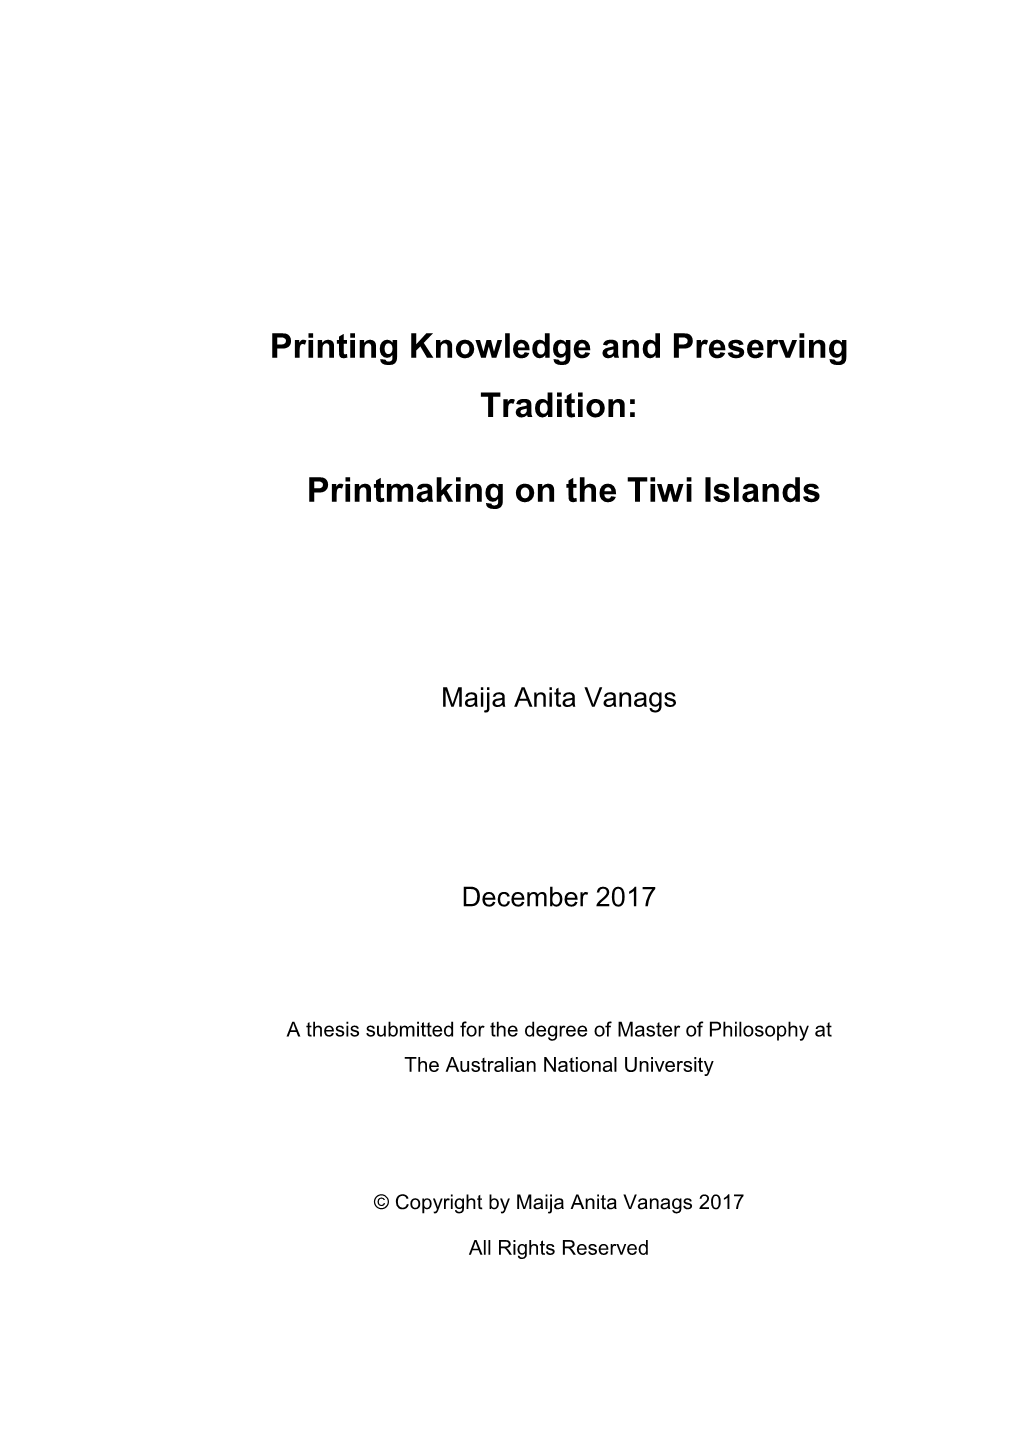 Printmaking on the Tiwi Islands